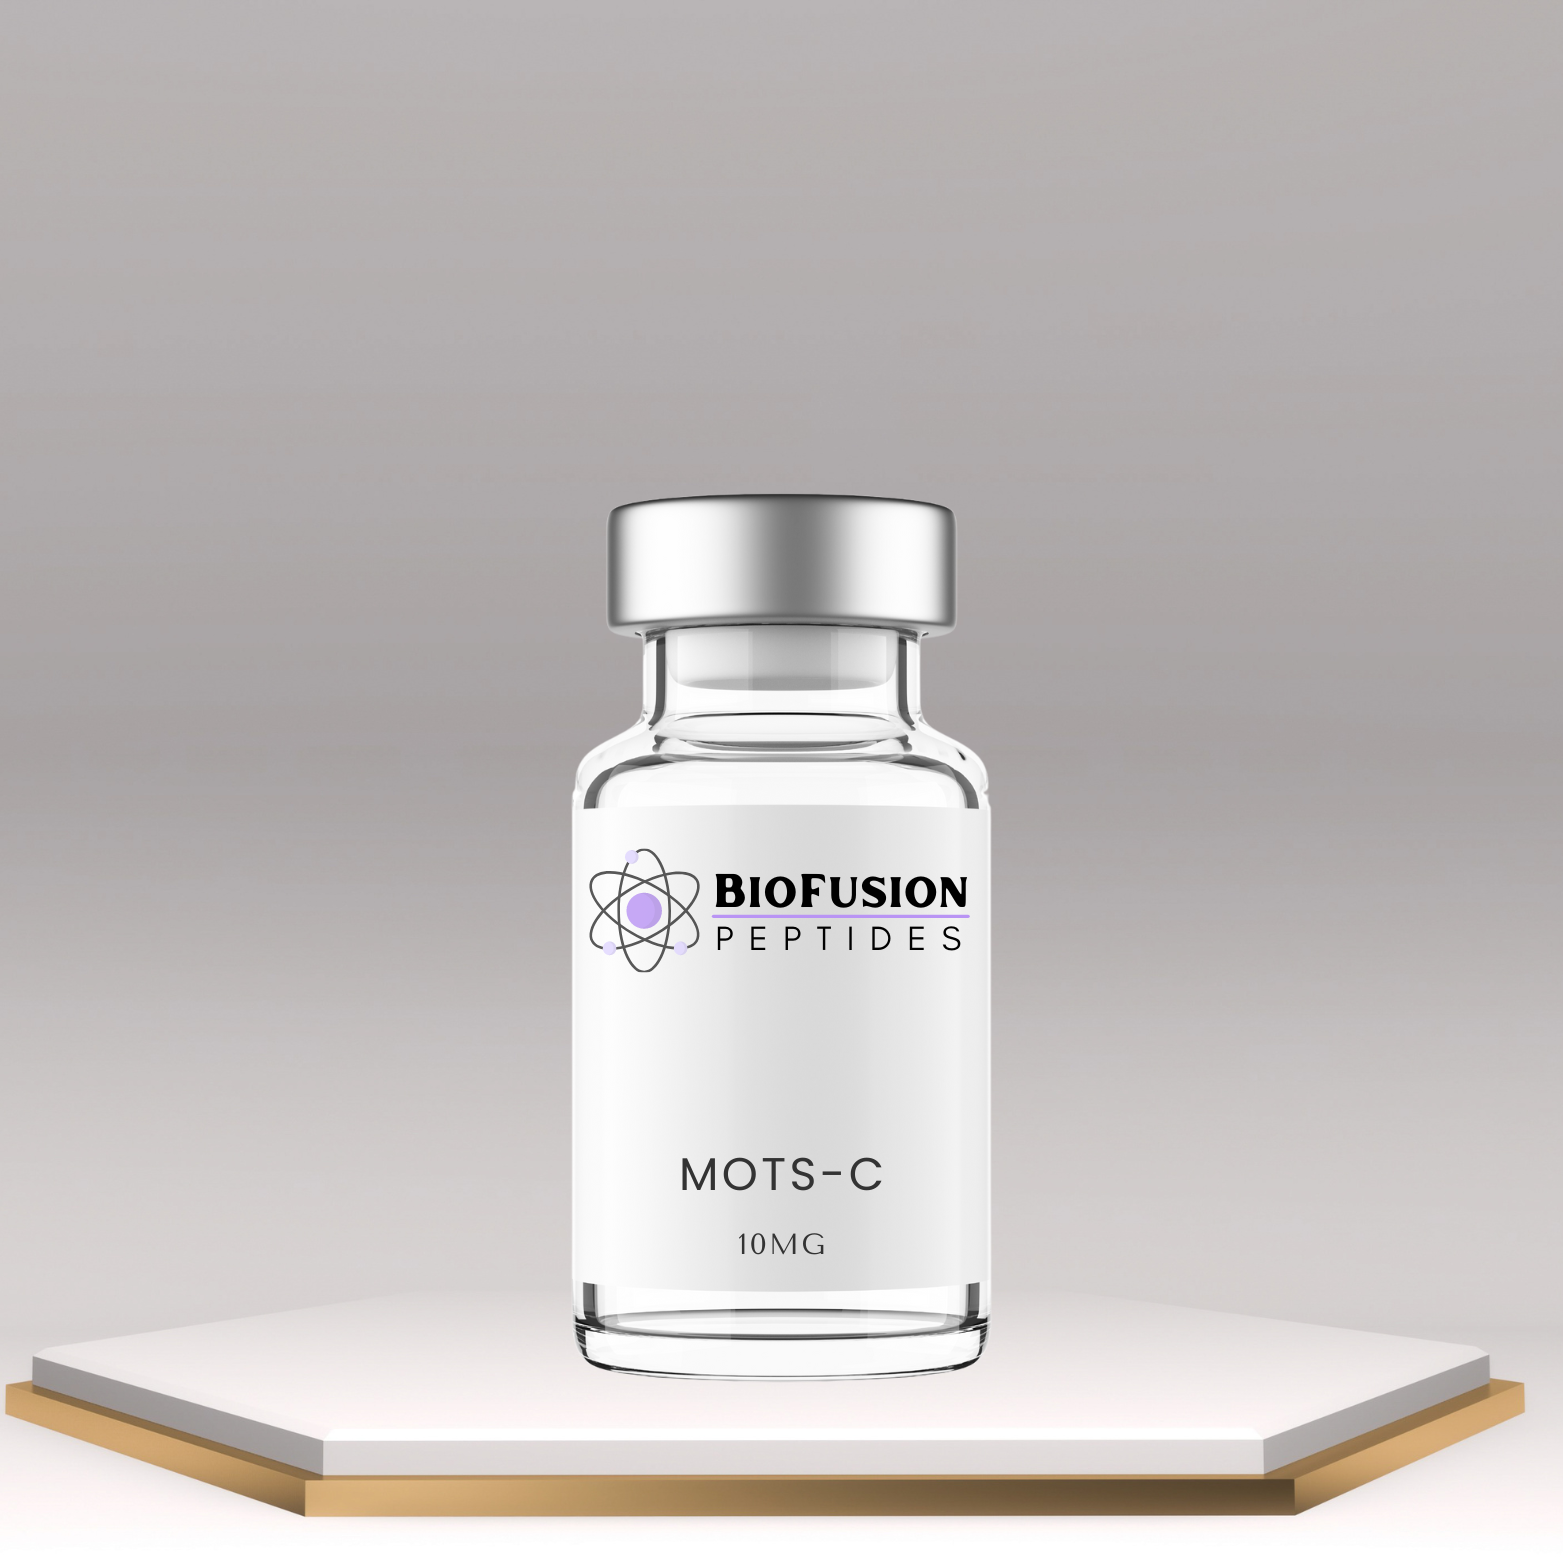 BioFusion Peptides MOTS-C vial